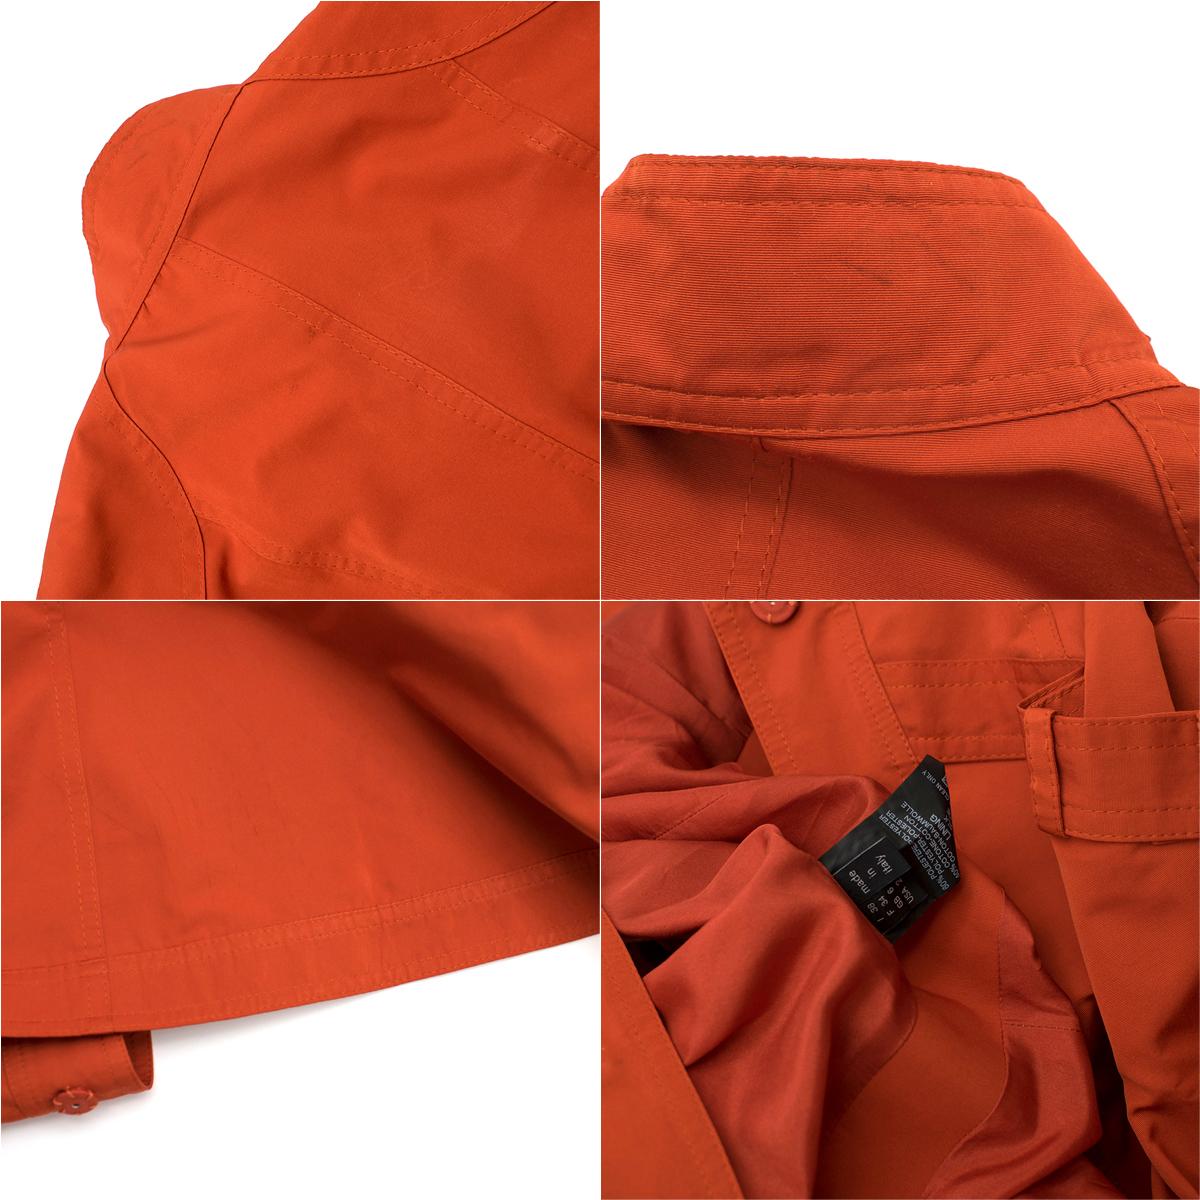 Derek Lam Brick Orange Sleeveless Utility Dress Size US 2 For Sale 1